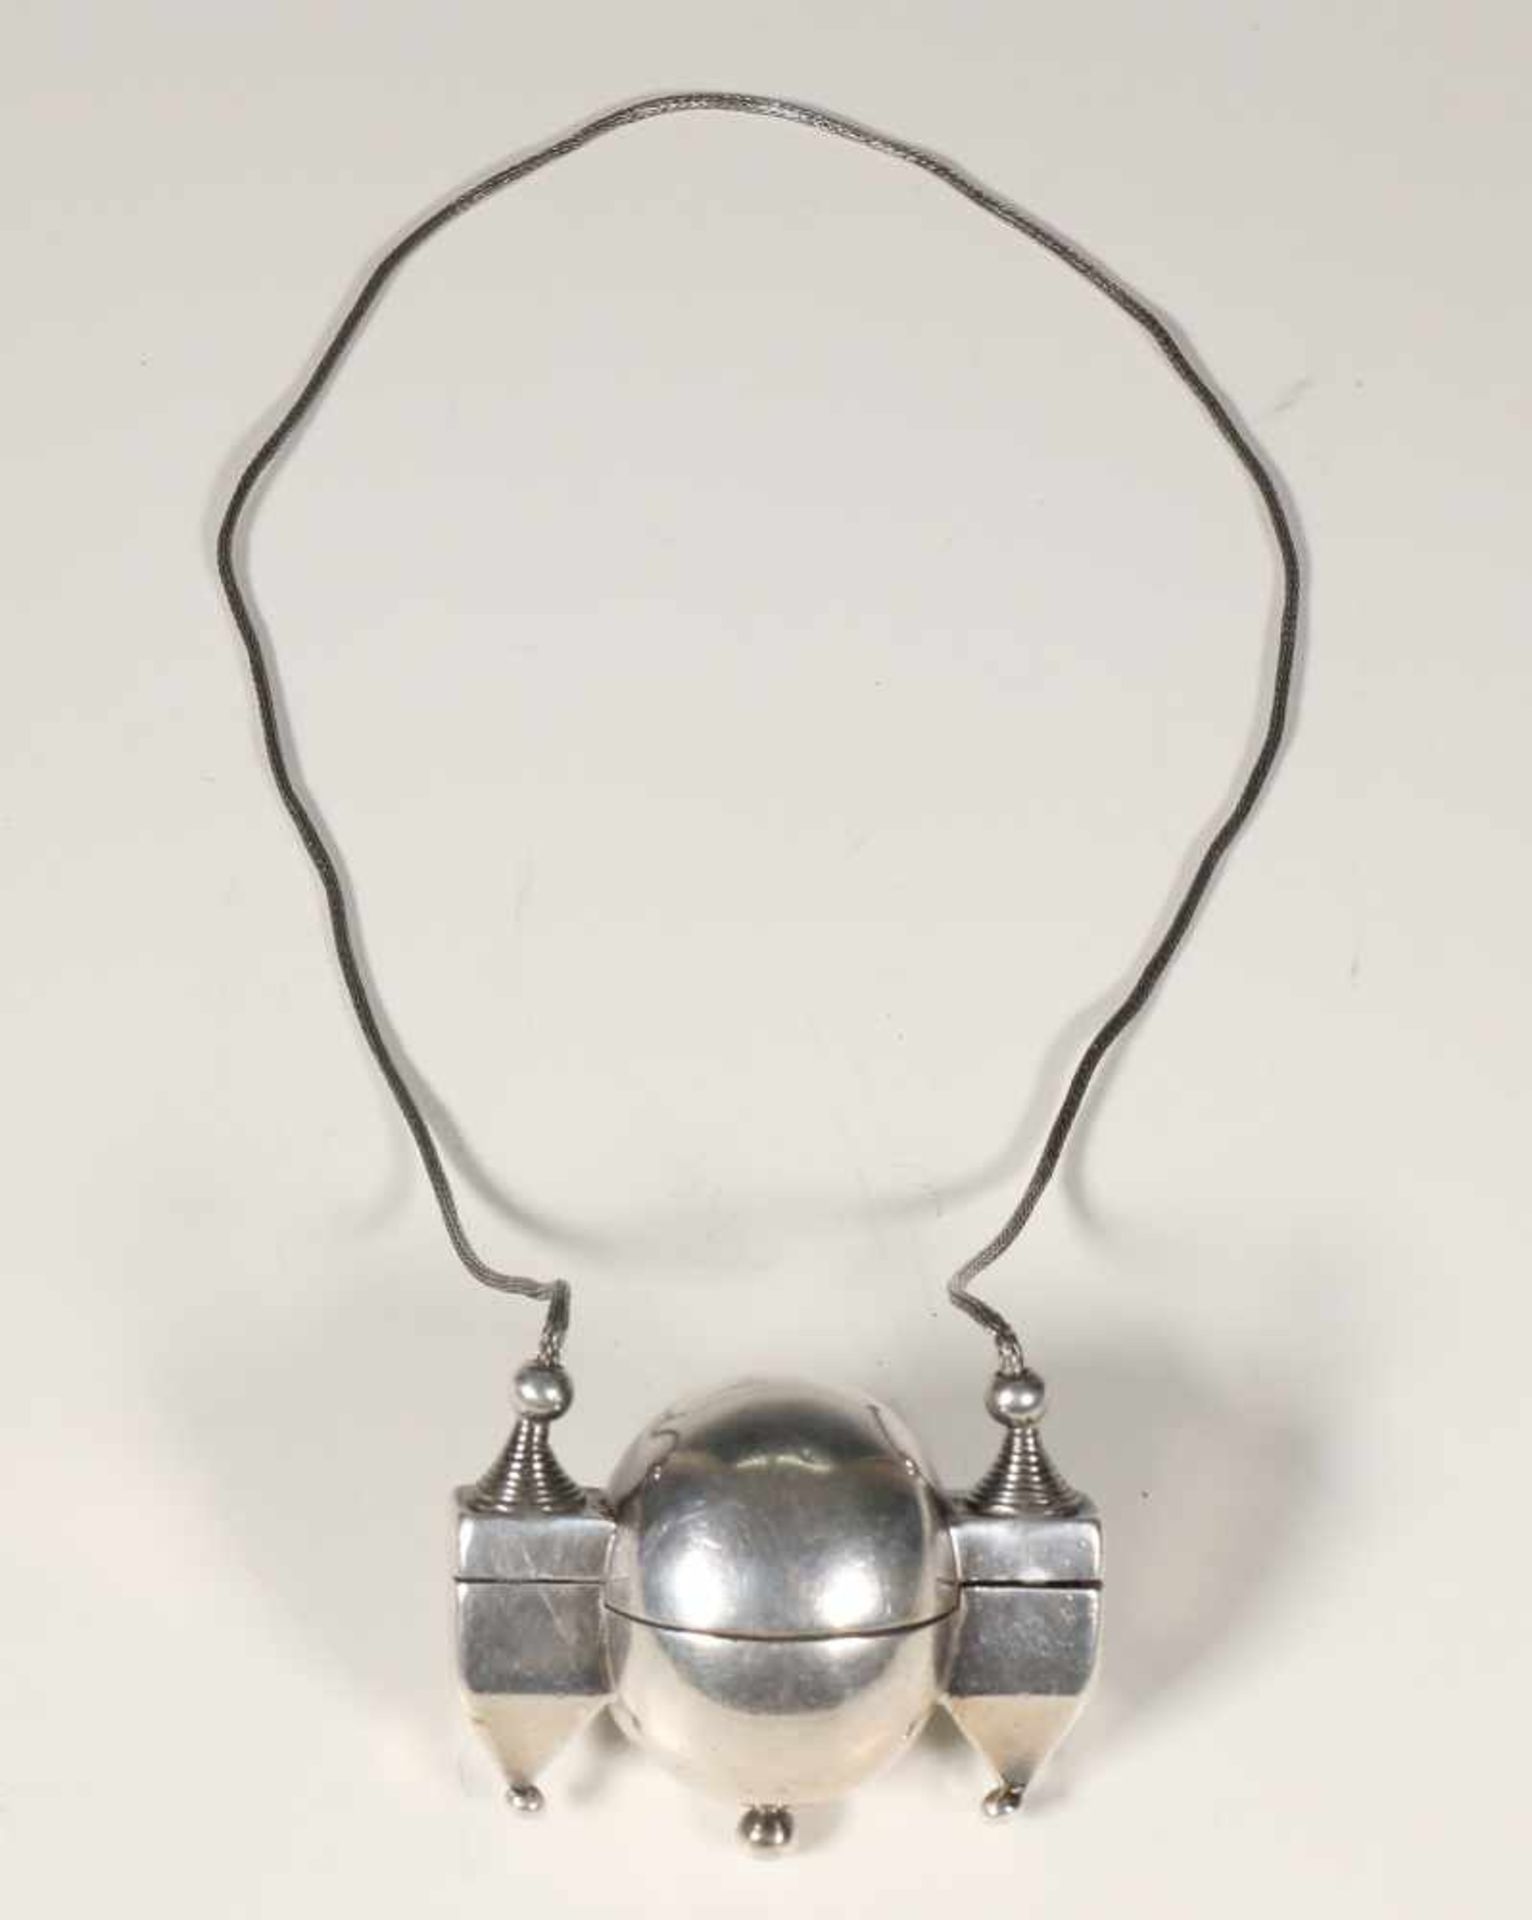 India, Karamataka, silver pendant necklace, used as lingam casket,designed to hold a lingam stone,